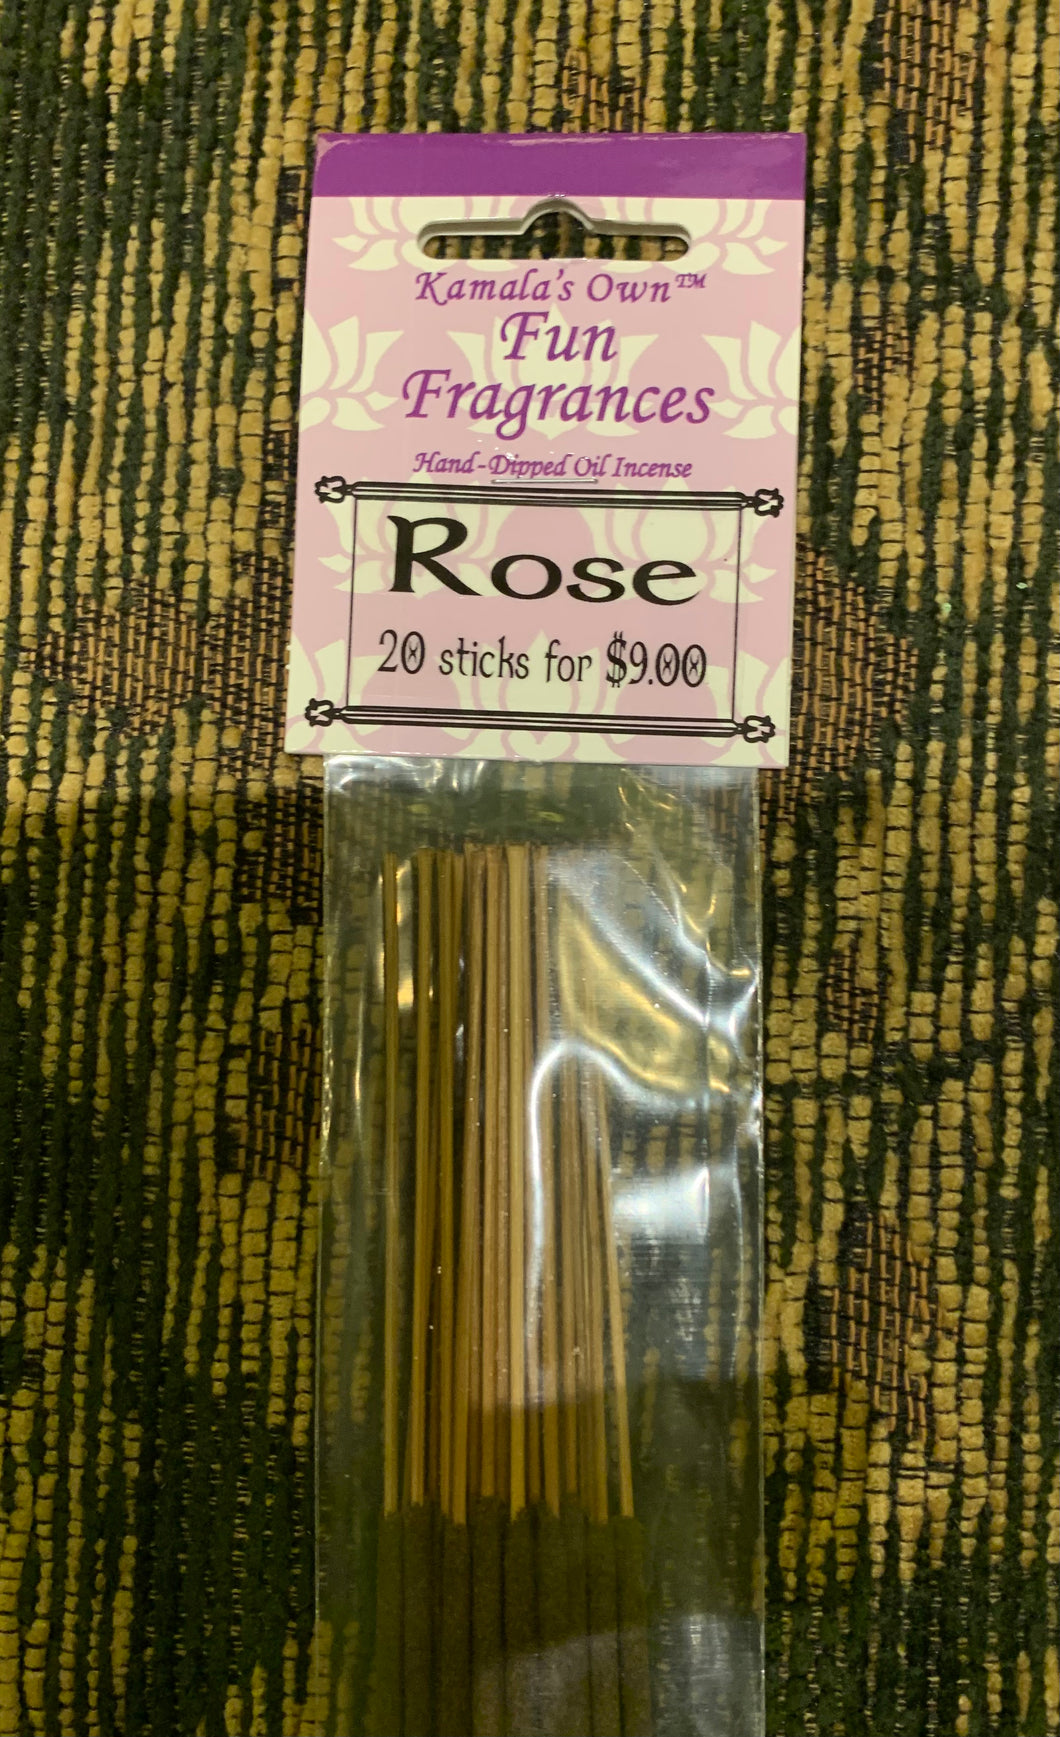 Rose incense sticks